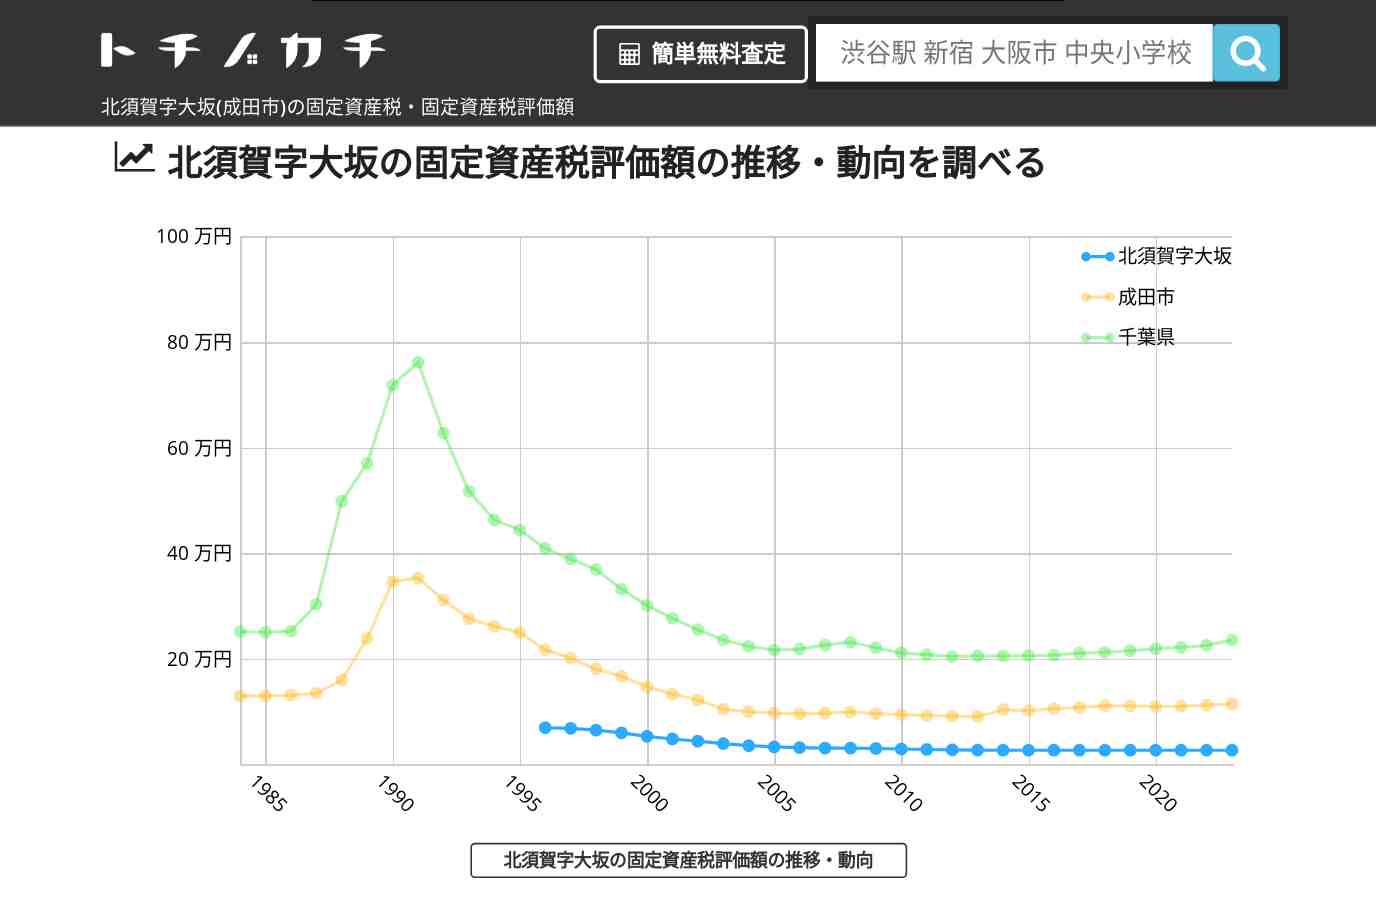 北須賀字大坂(成田市)の固定資産税・固定資産税評価額 | トチノカチ